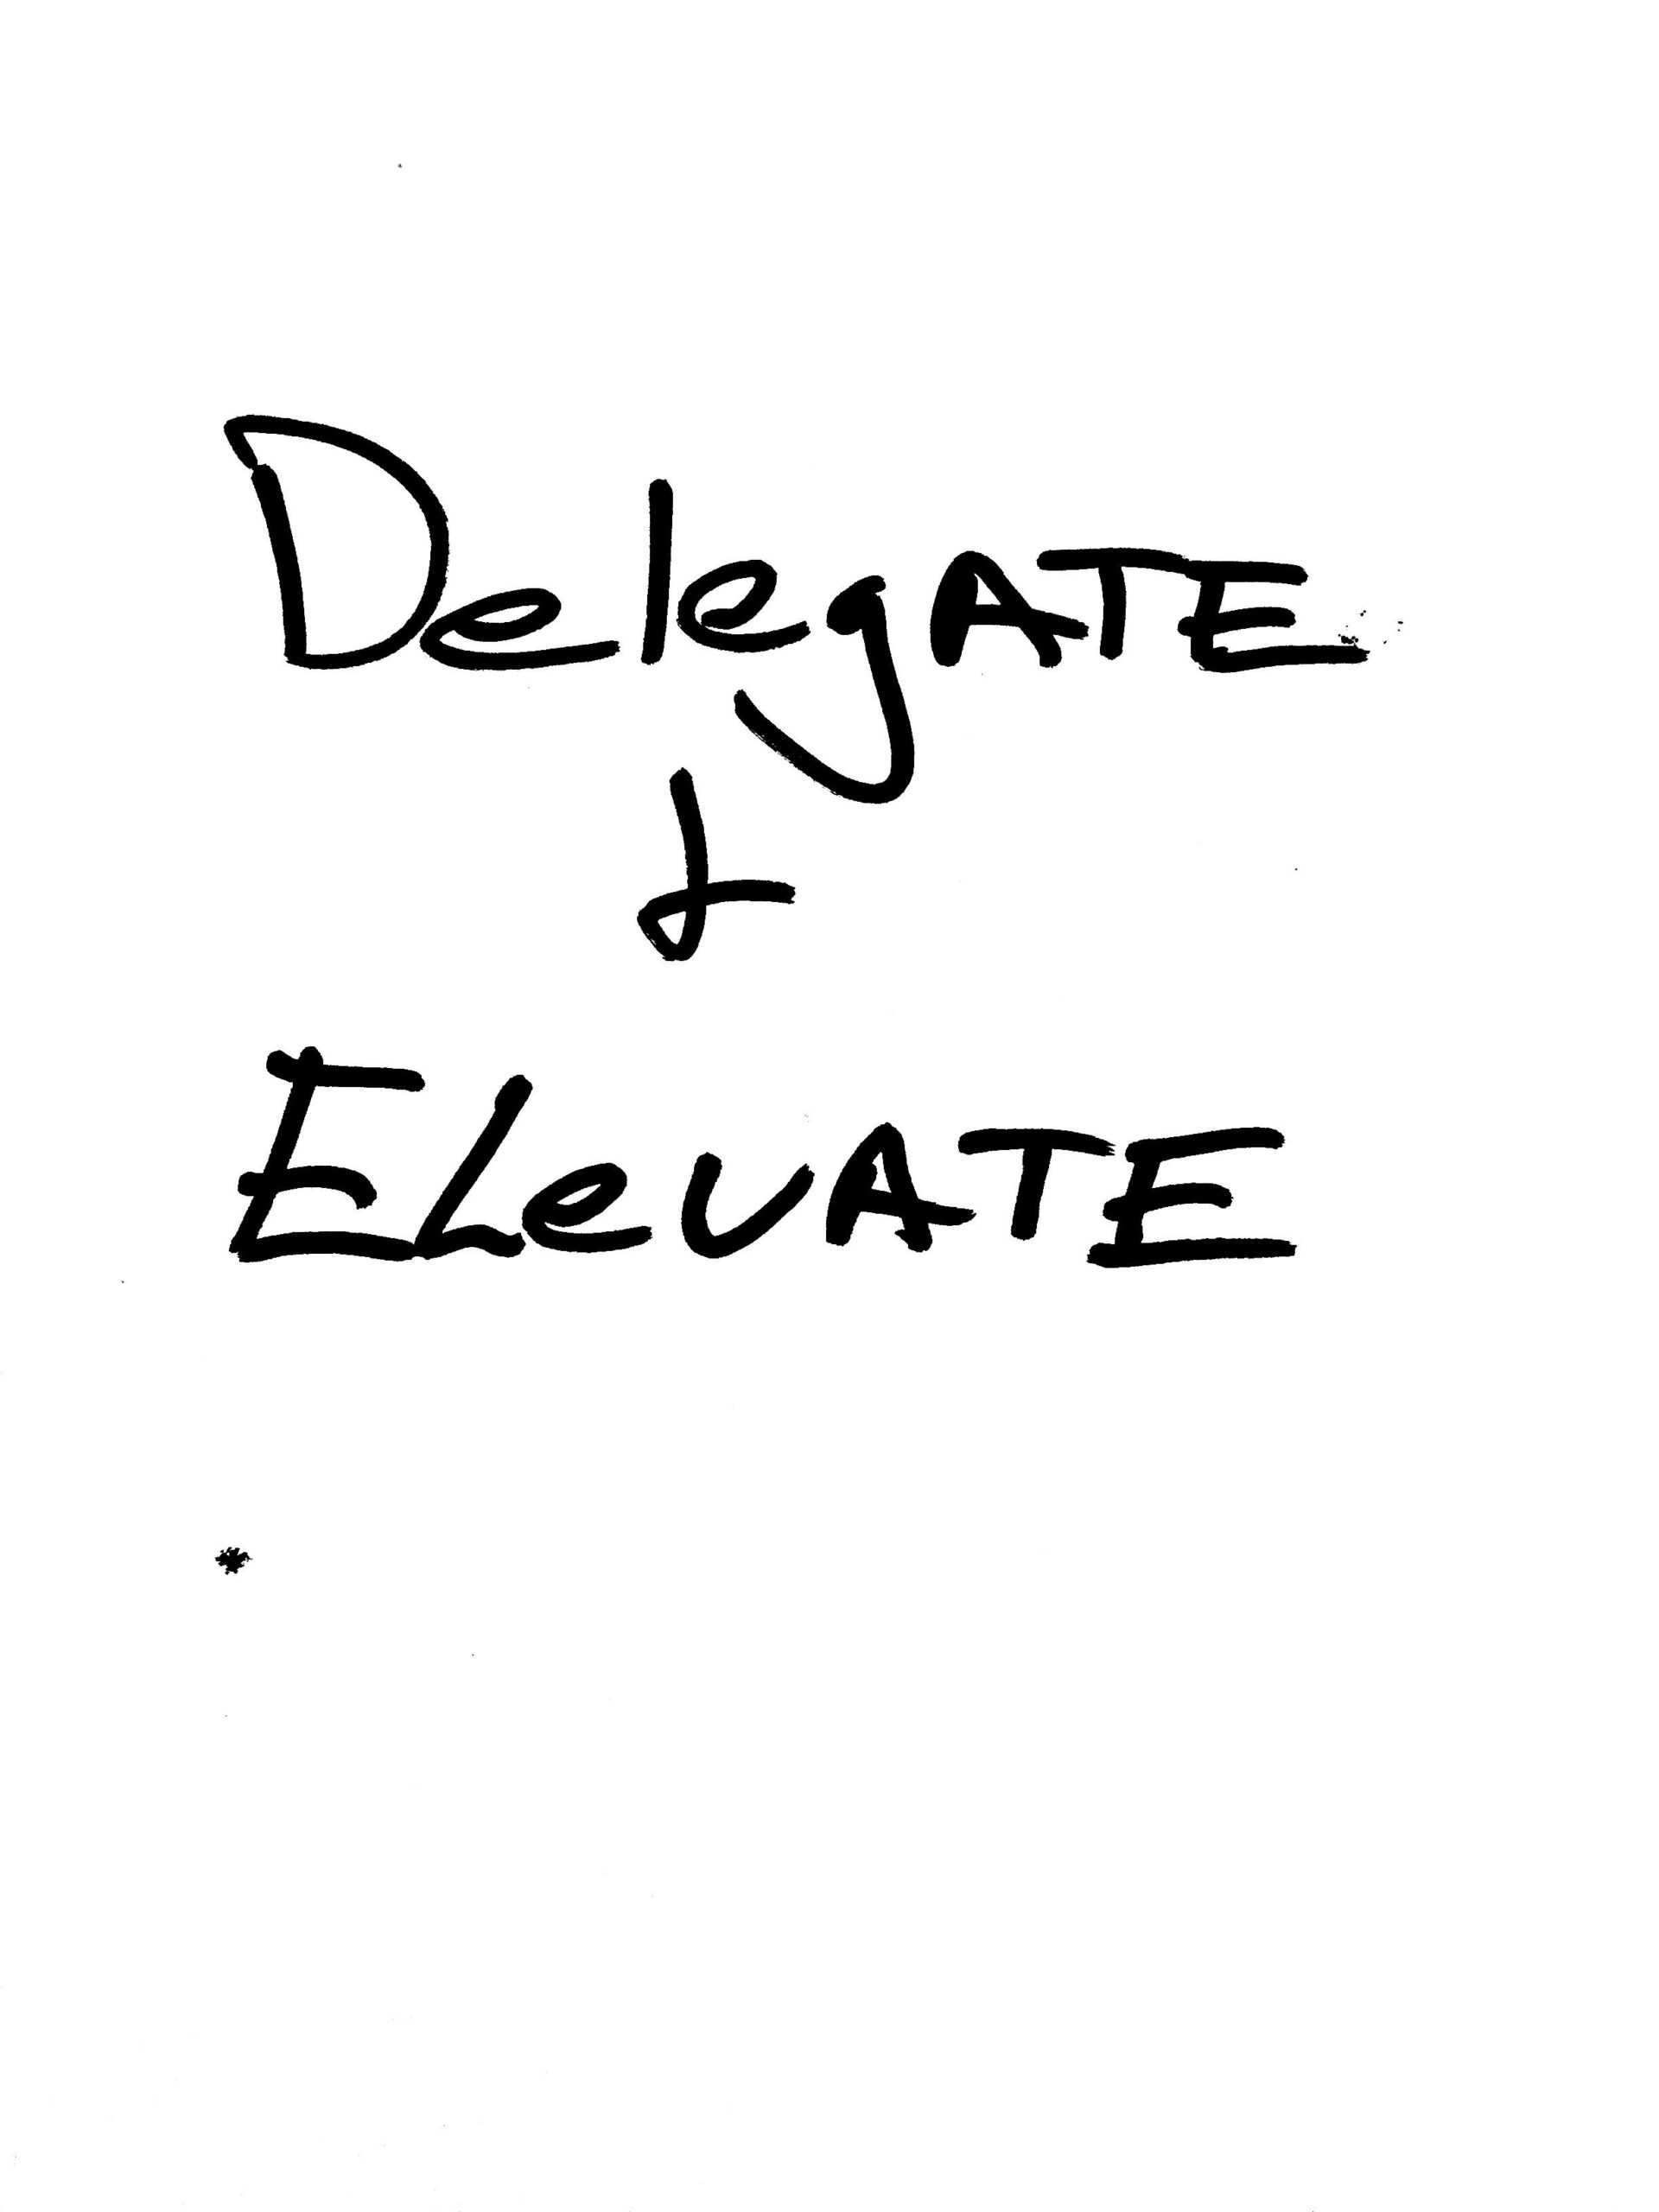 delegate & elevate 